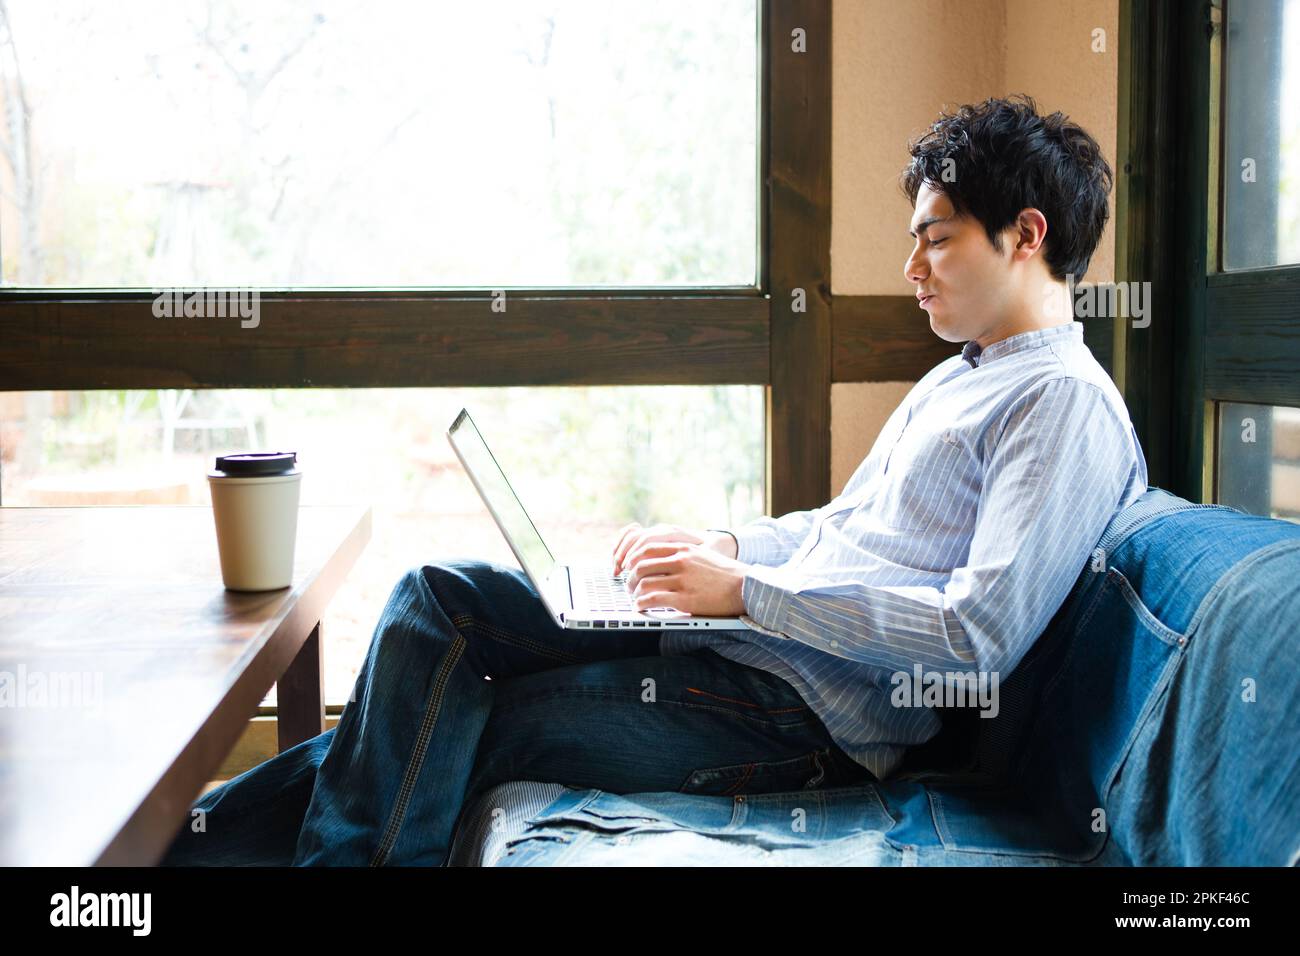 Men using computers at a café Stock Photo